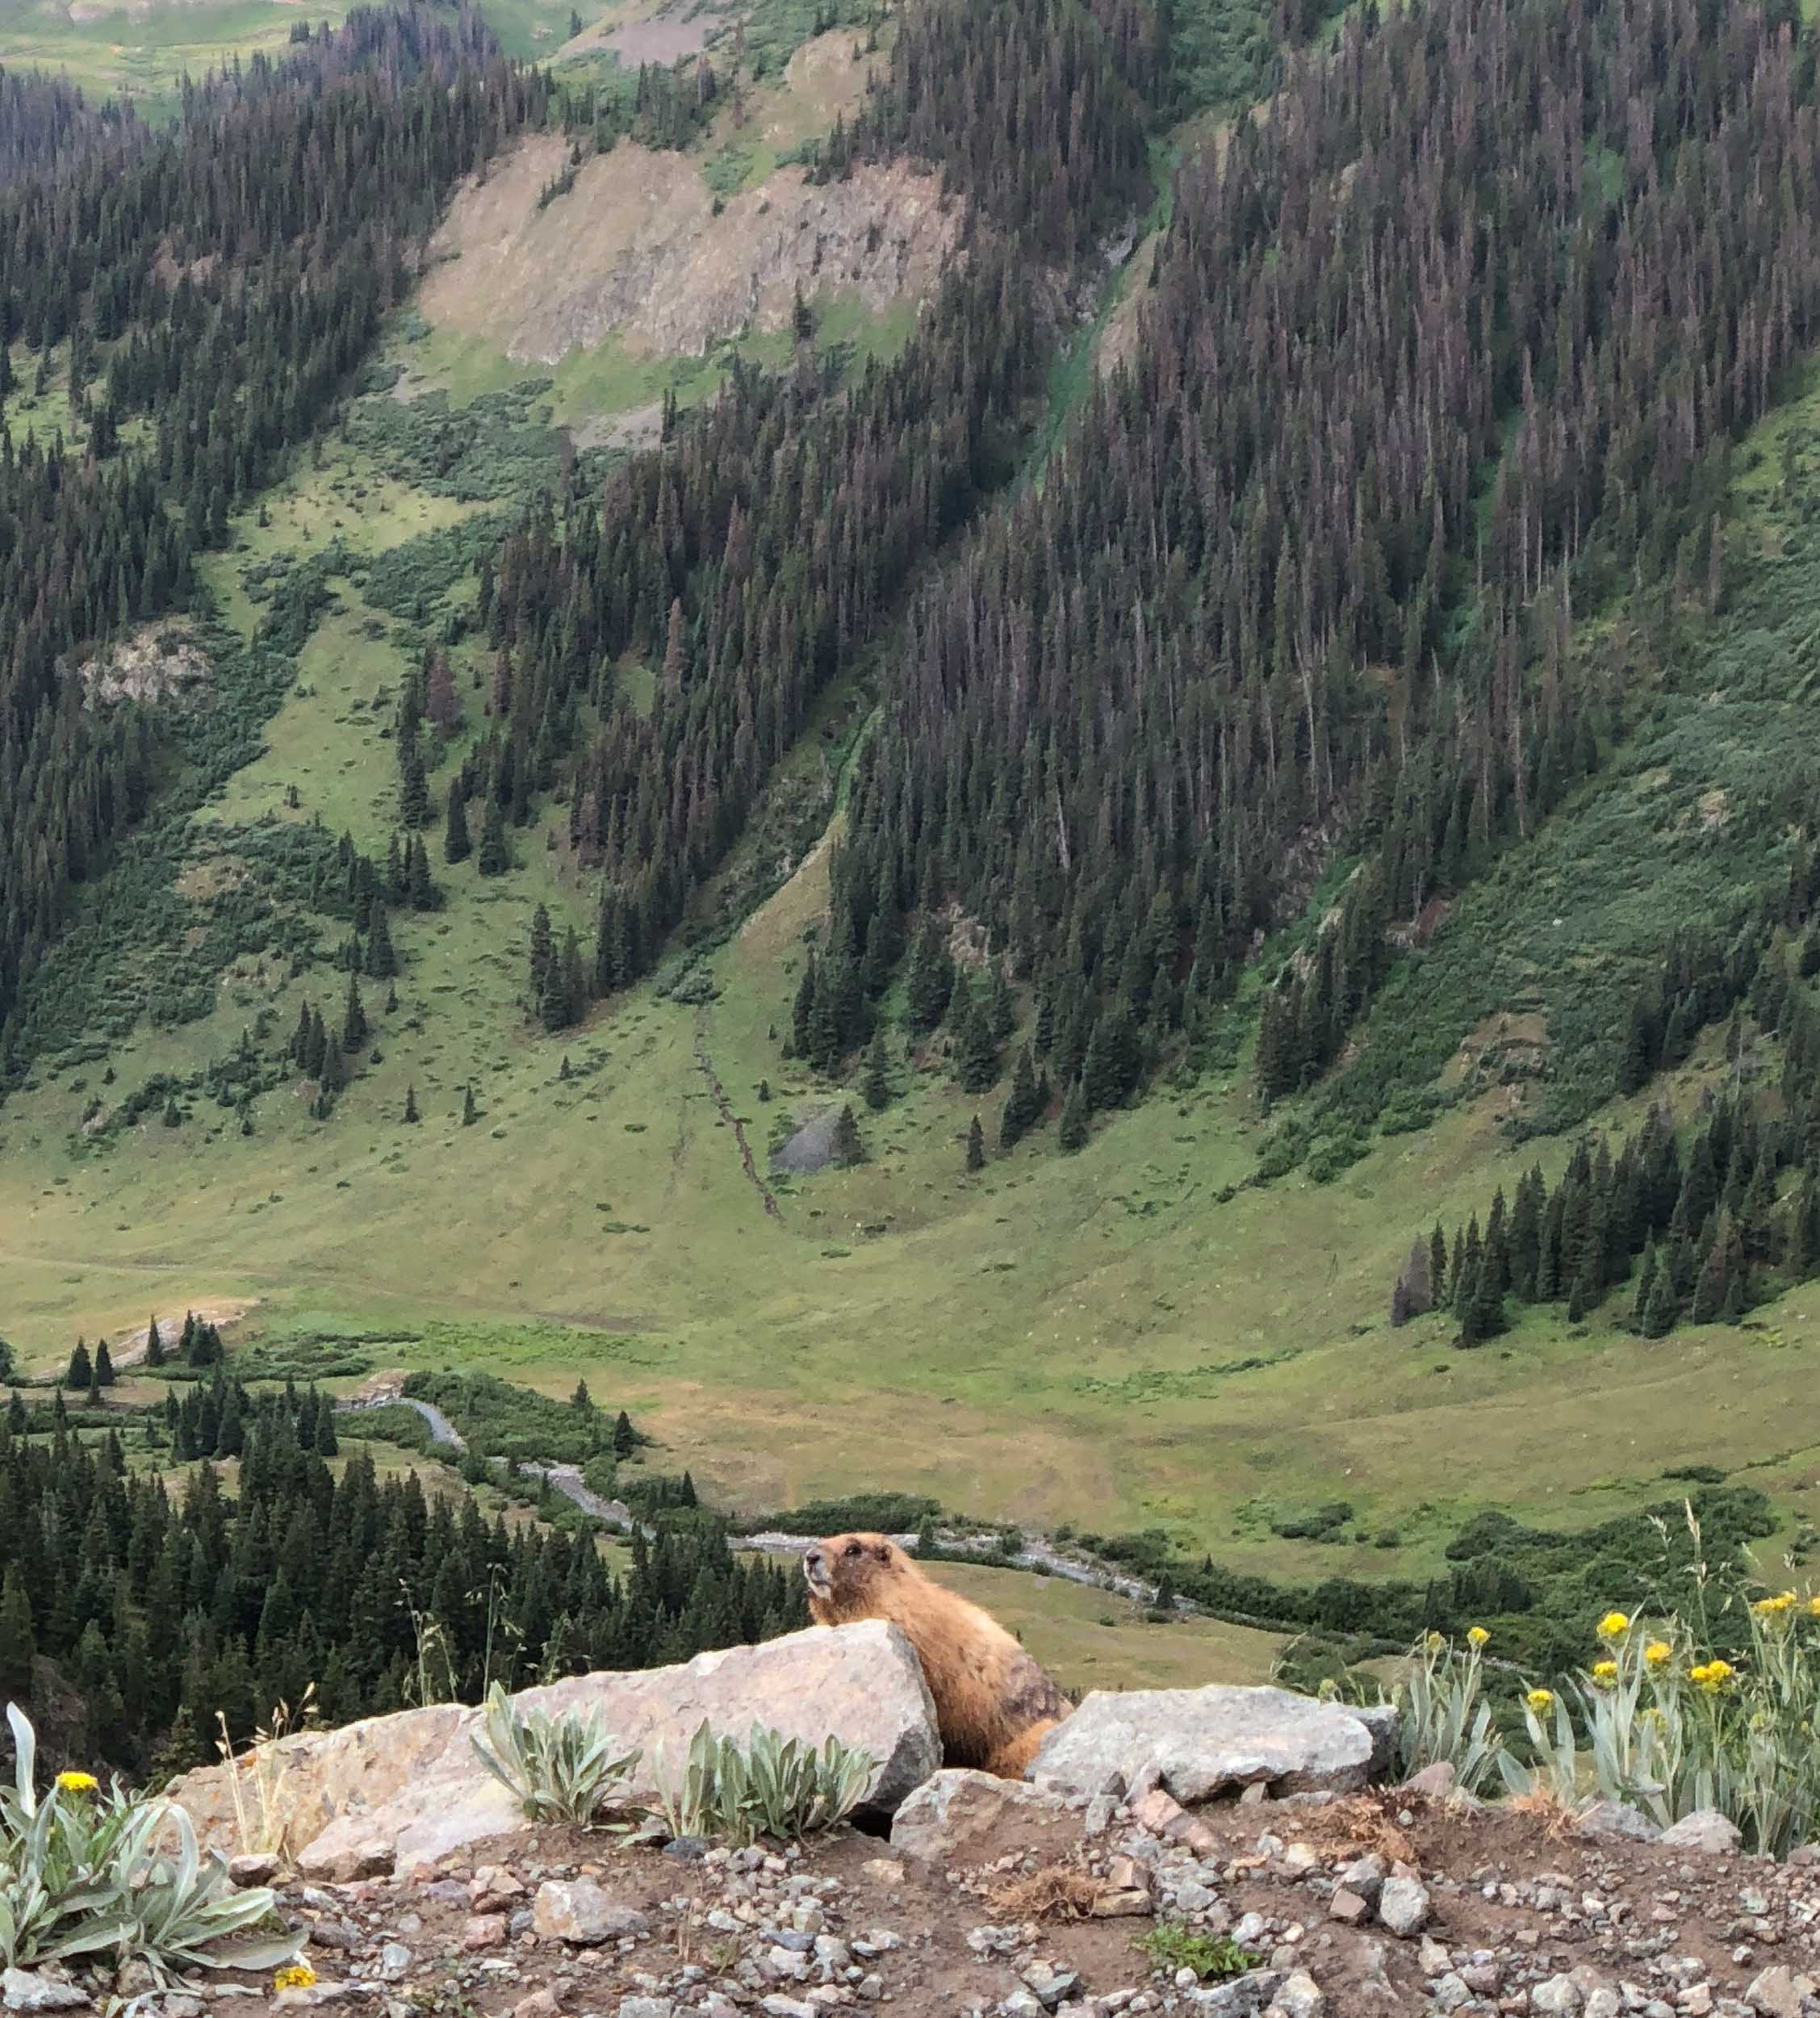  Marmot along the Alpine Loop - iPhone 8 Plus, Moment Tele 60mm, Snapseed 